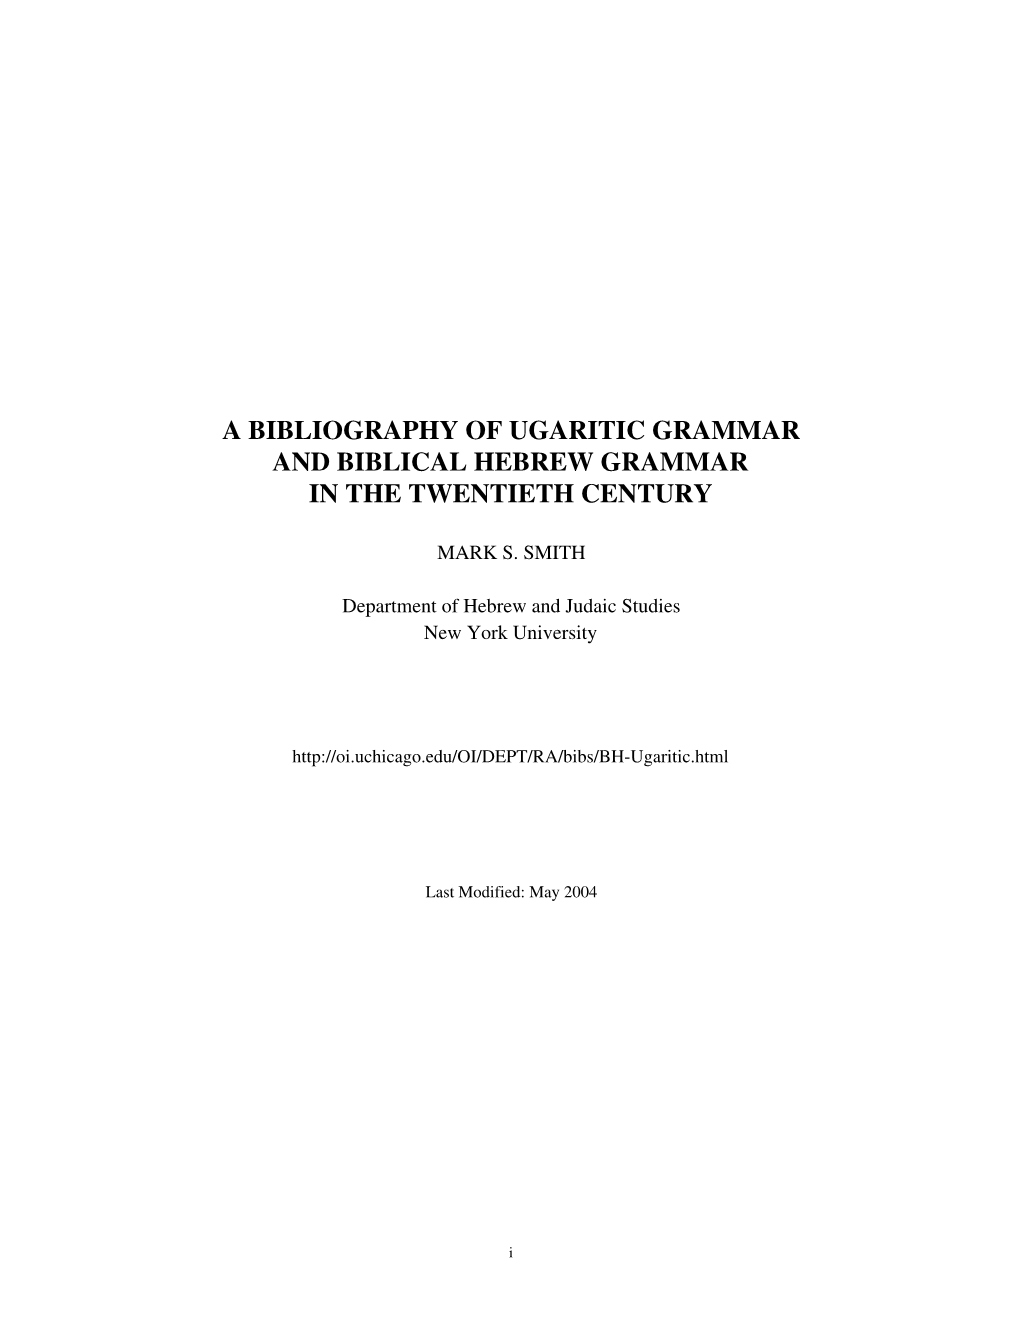 A Bibliography of Ugaritic Grammar and Biblical Hebrew Grammar in the Twentieth Century